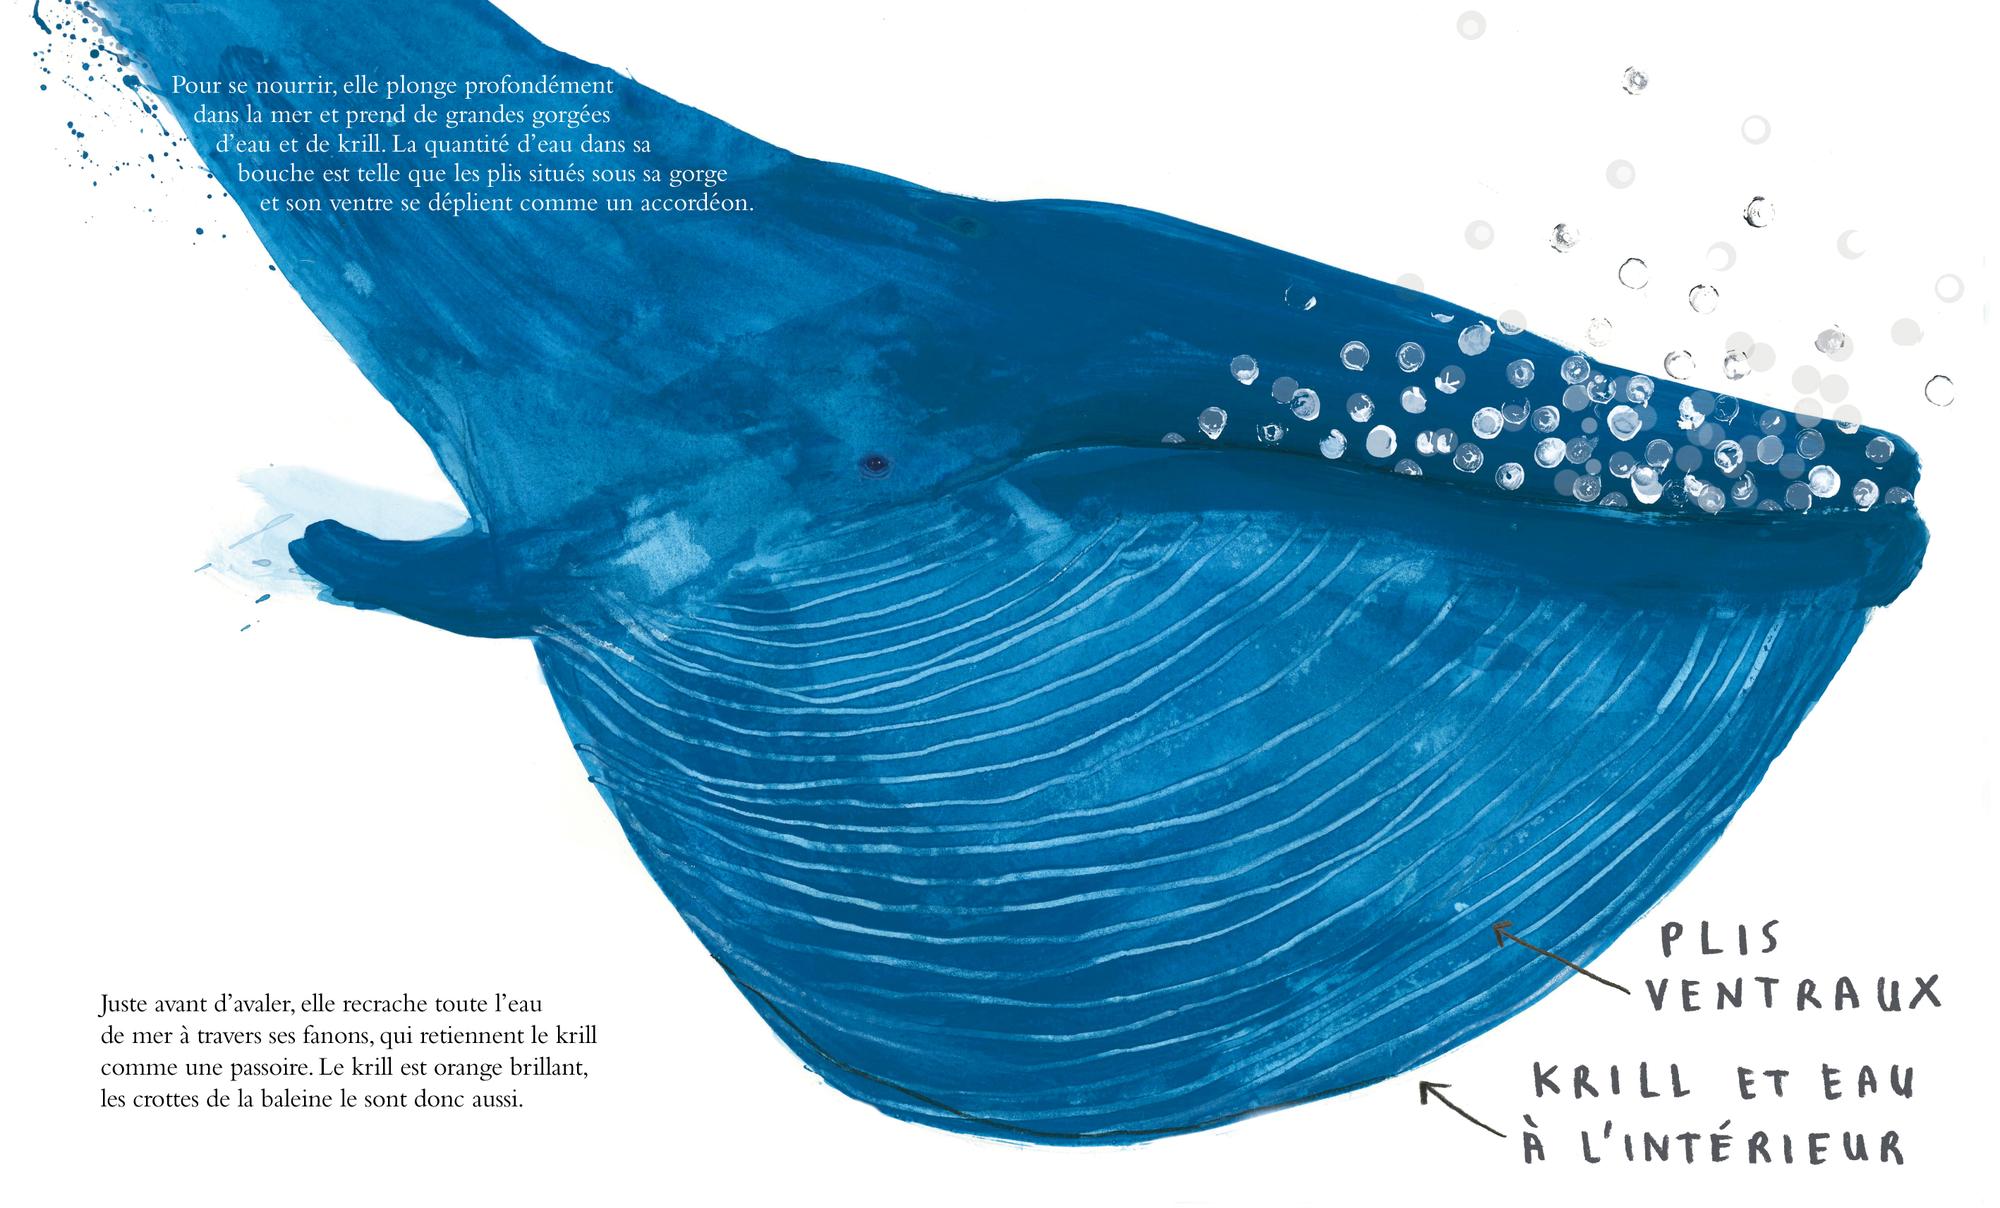 Кит личная жизнь. Синий кит. Изображение кита. Кит синий кит.